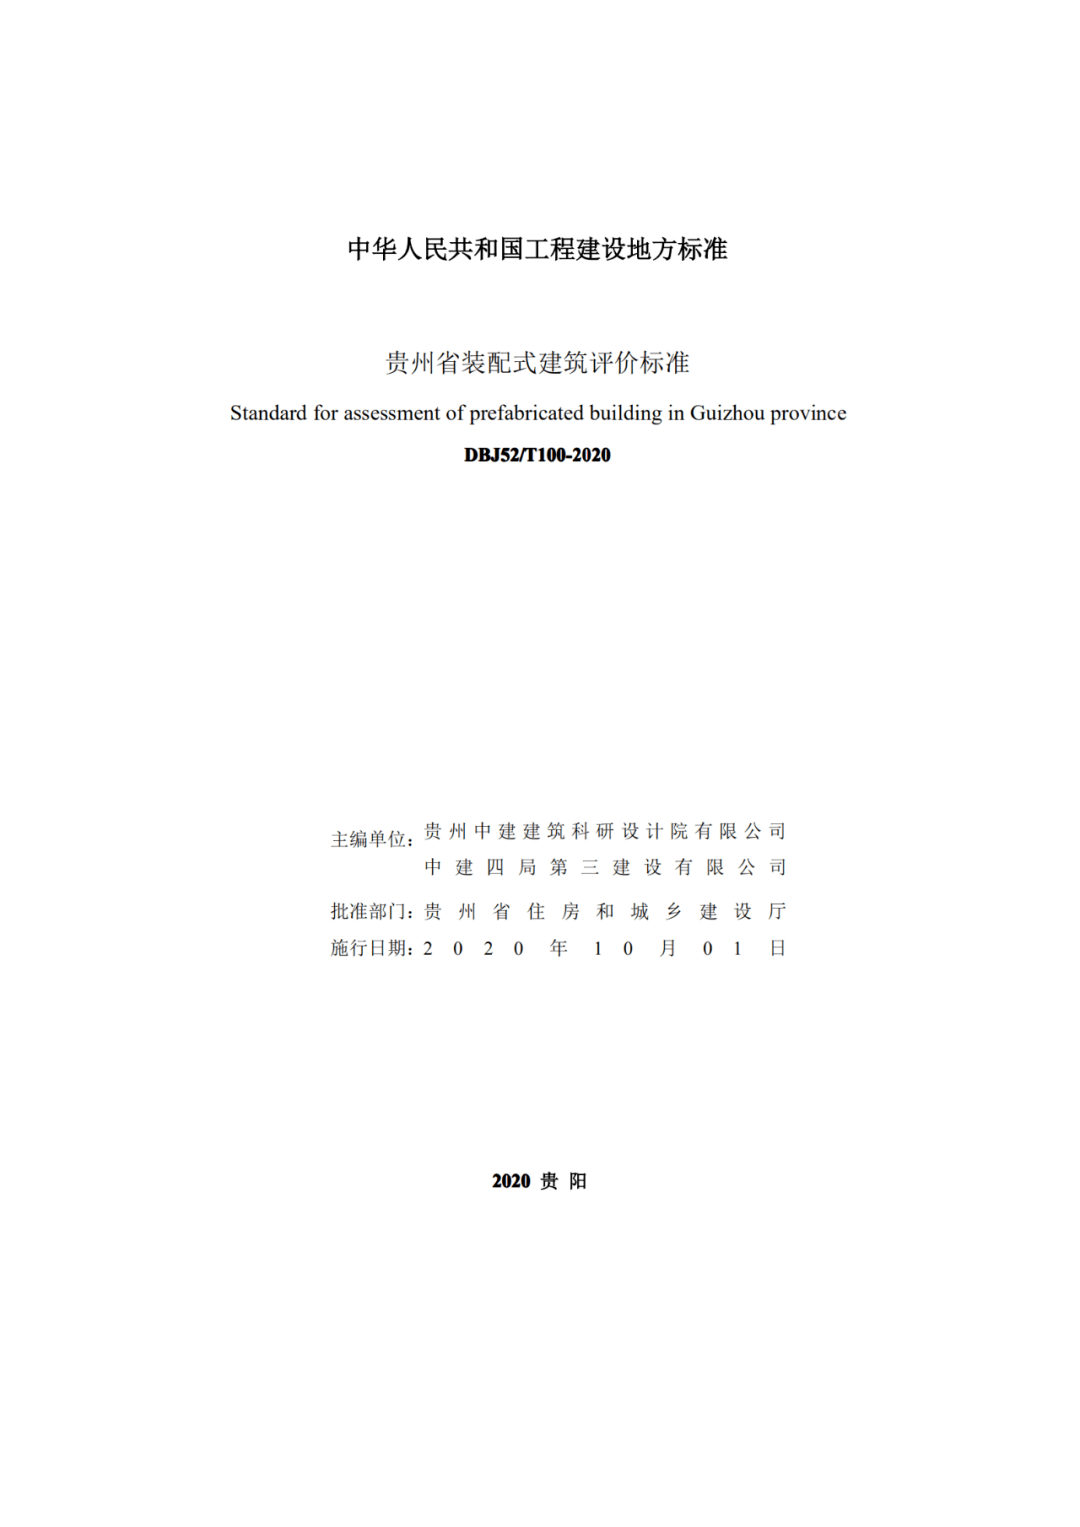 jbo竞博官网-
《贵州省装配式修建评价尺度》公布 10月1日起实施(图2)